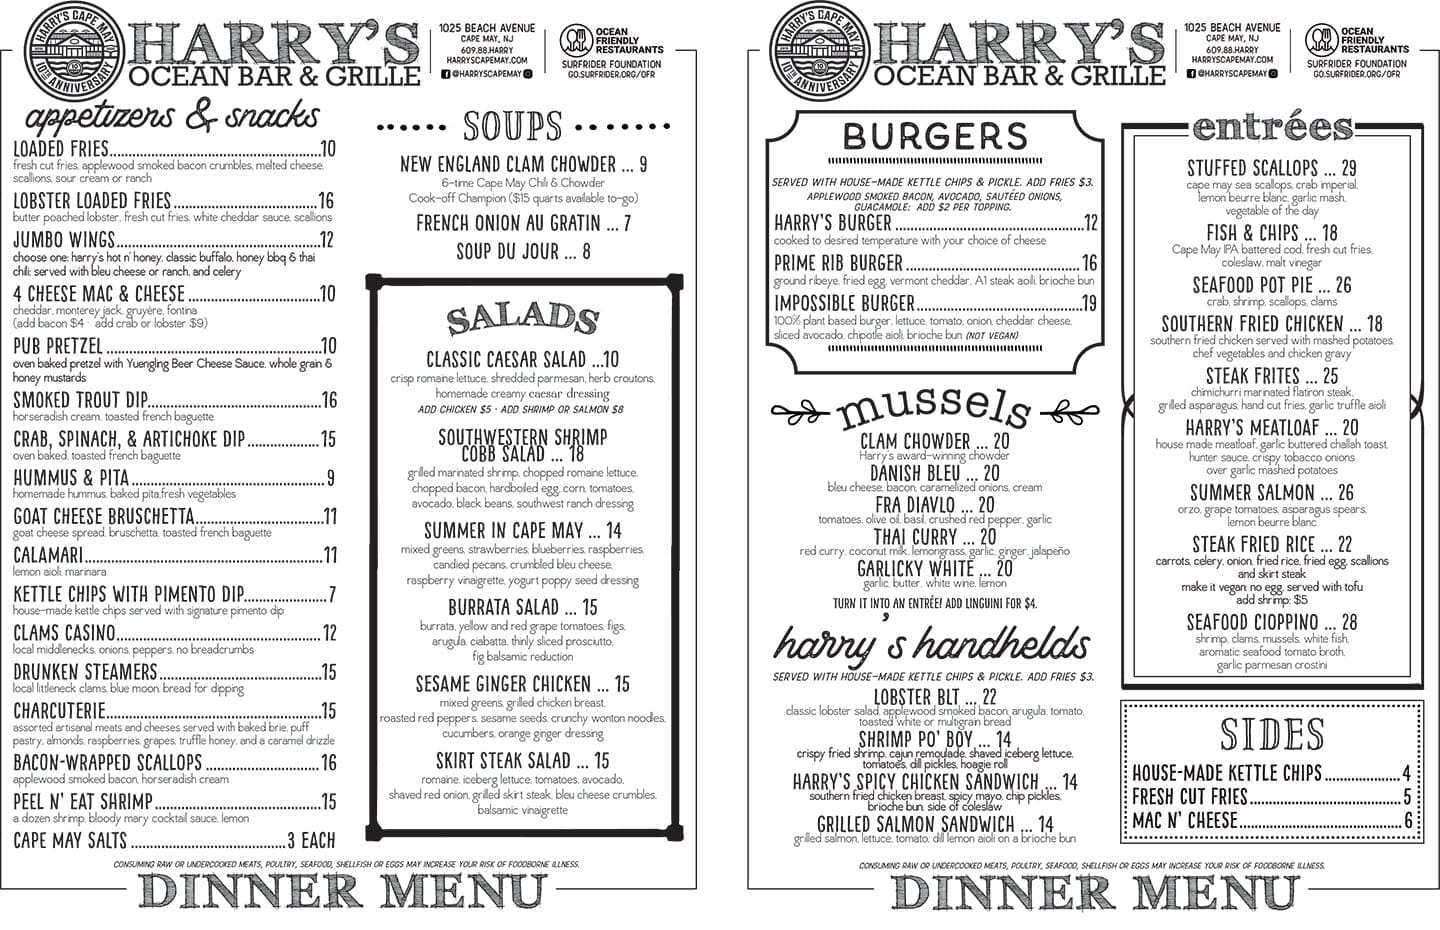 Harry's Ocean Bar & Grill Restaurant - Cape May, NJ